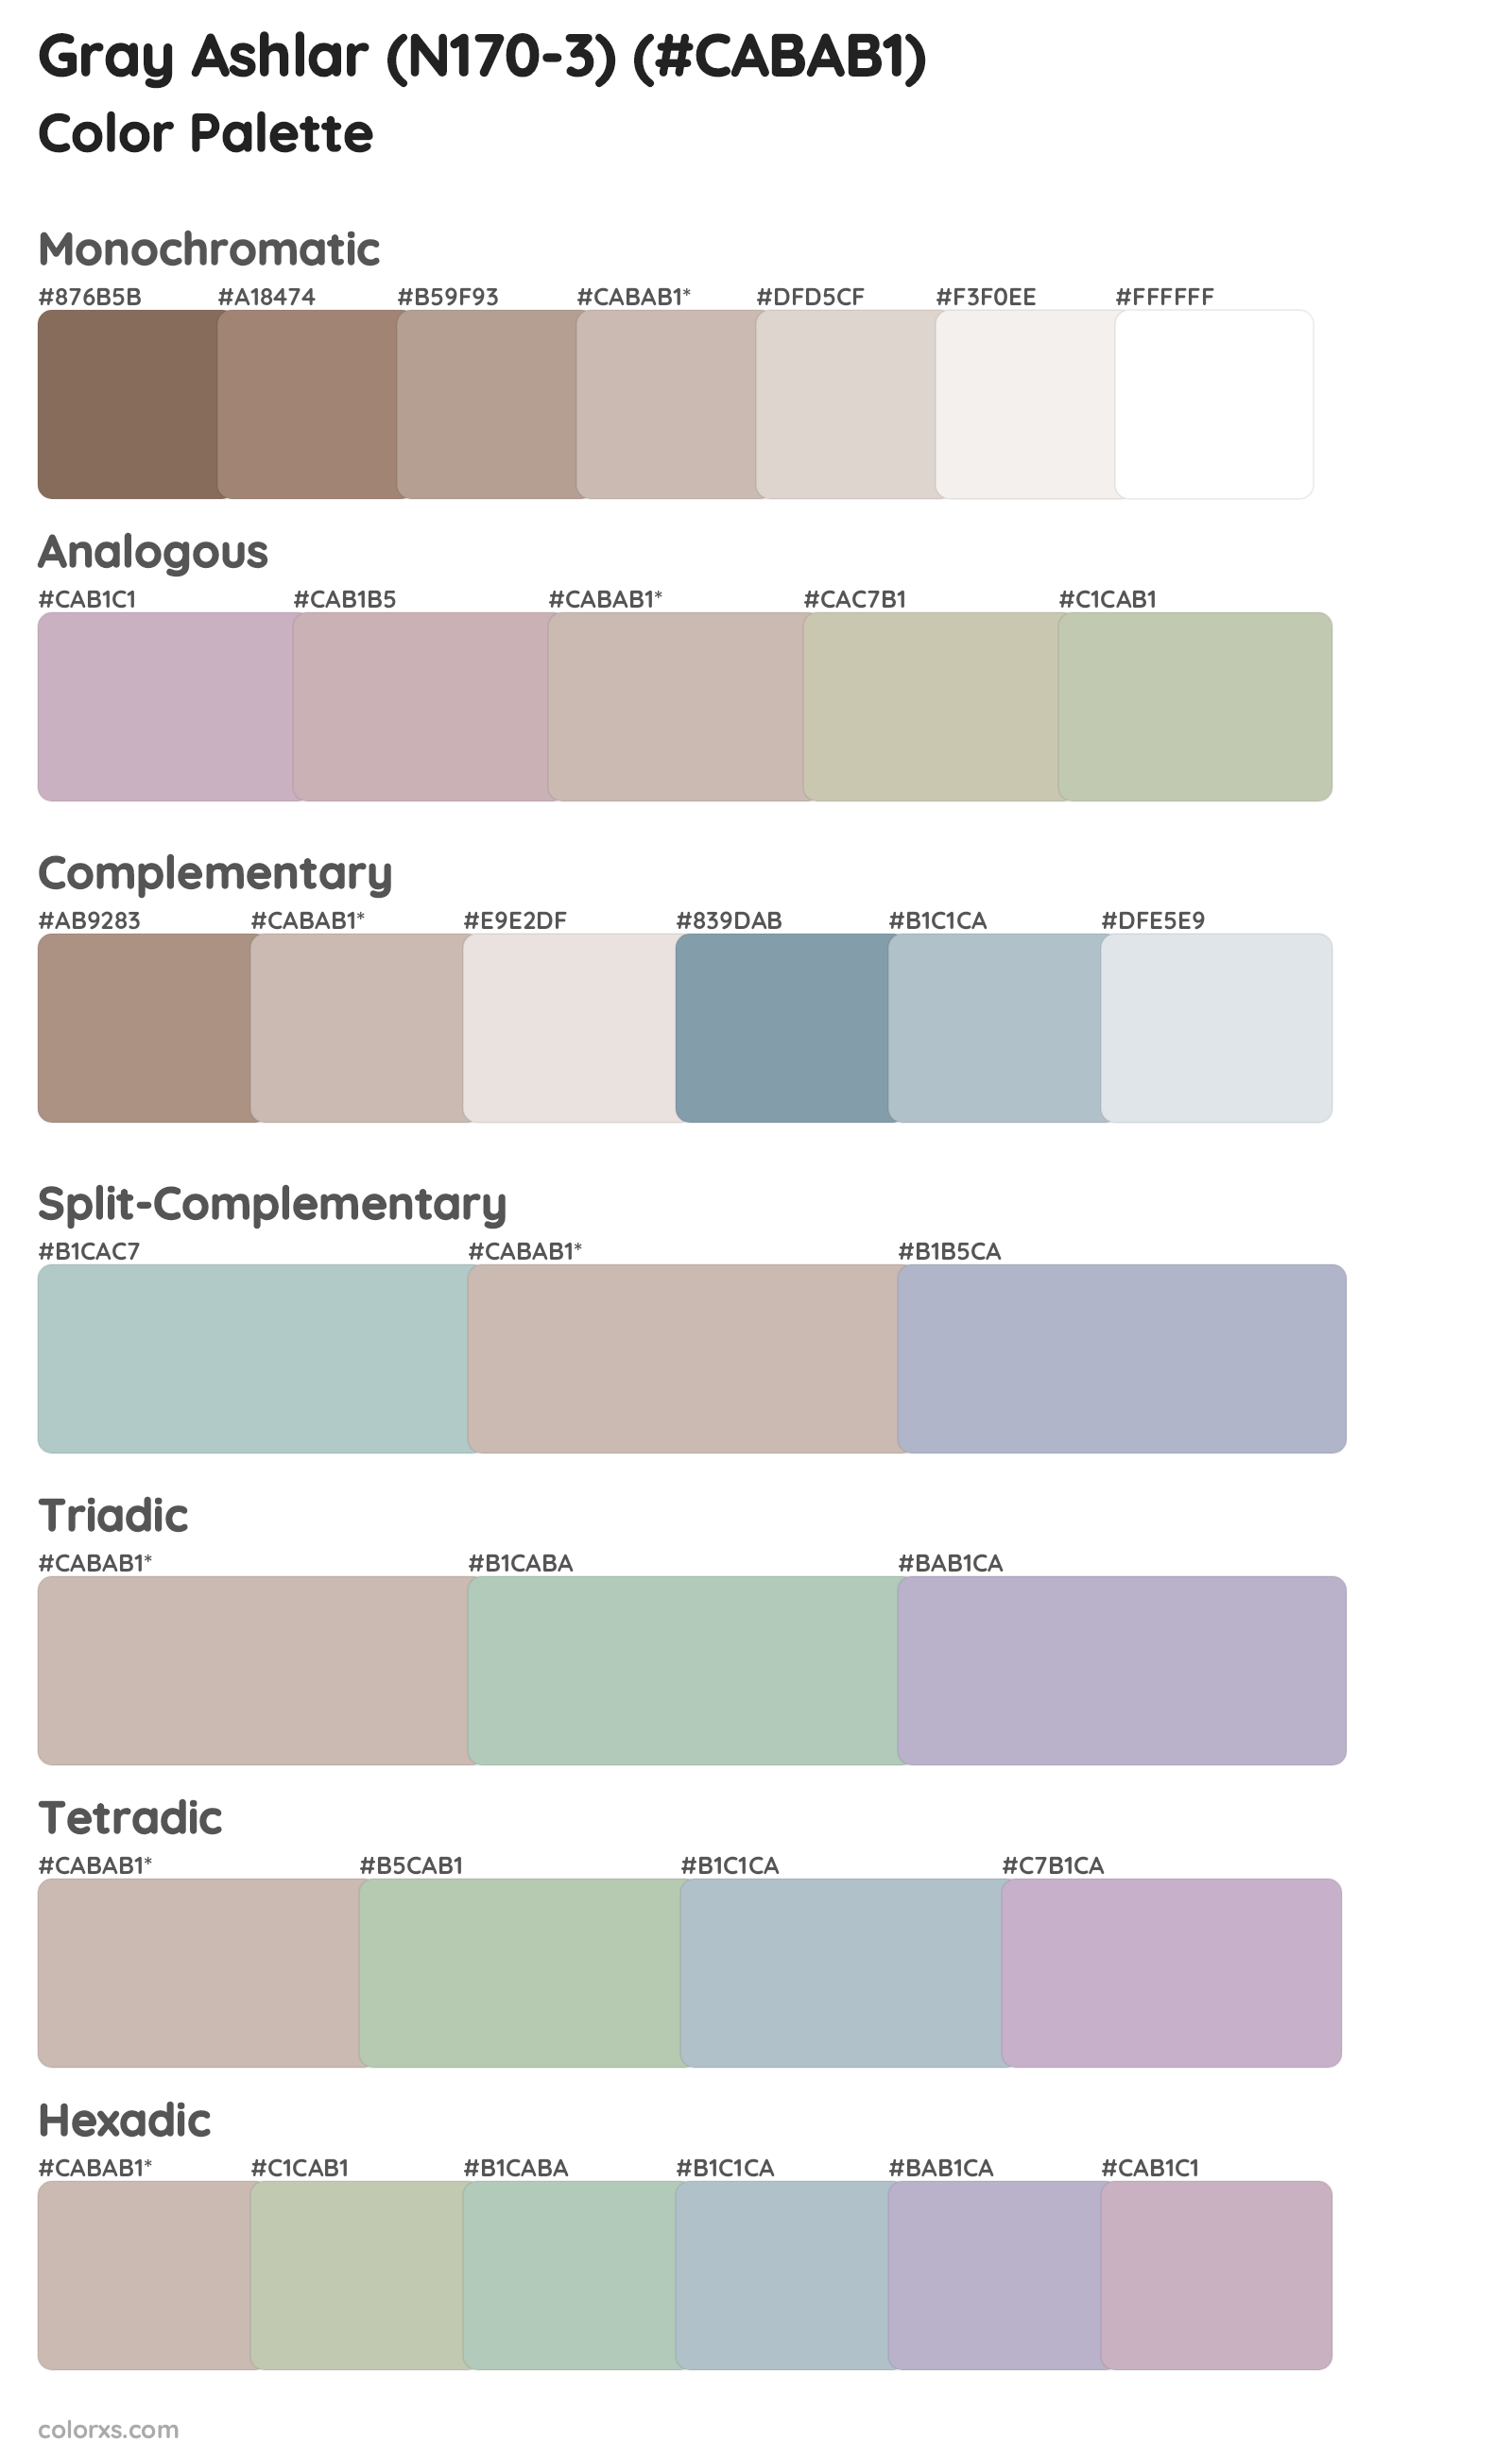 Gray Ashlar (N170-3) Color Scheme Palettes